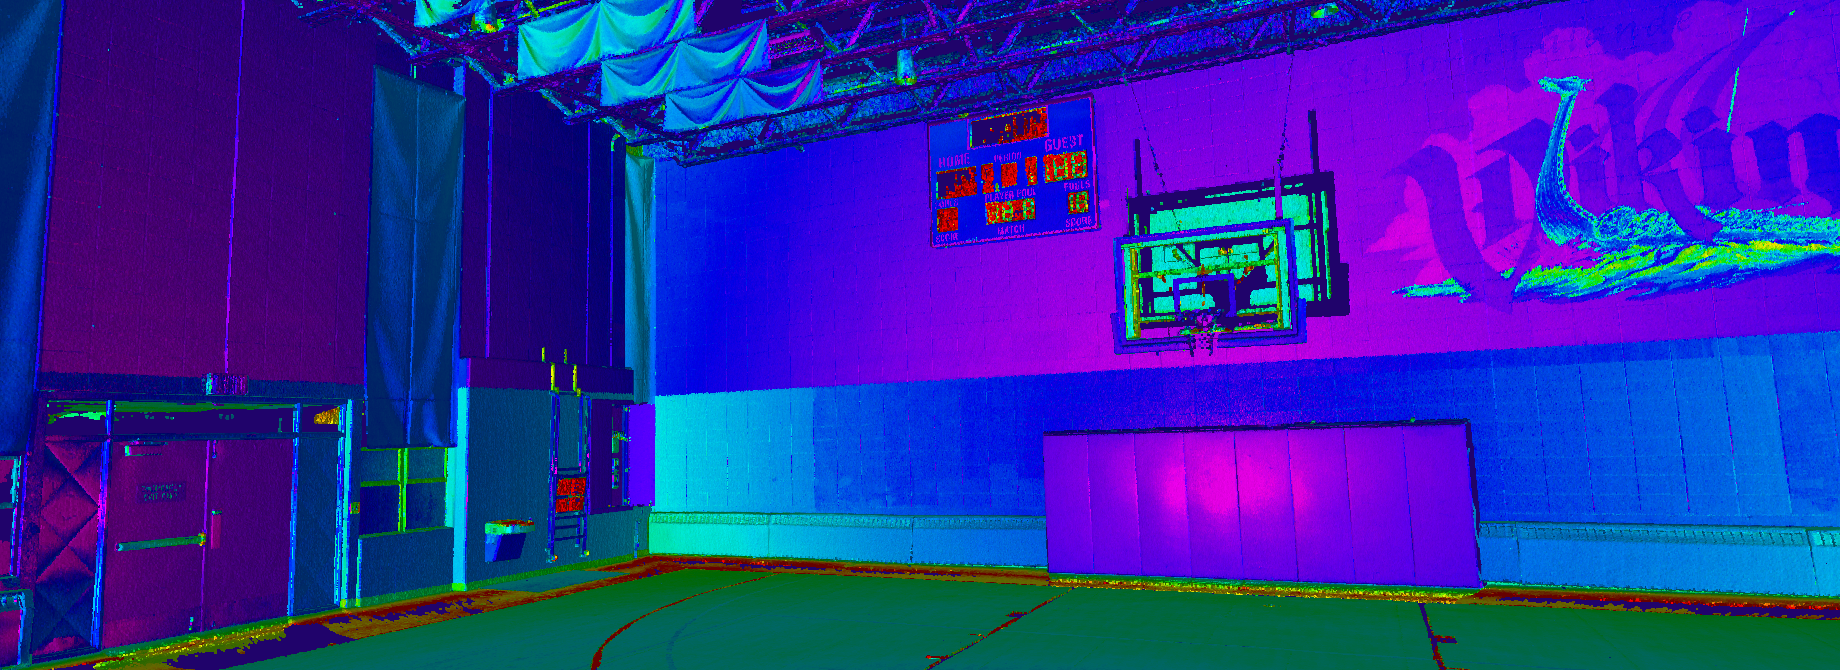 3D laser scan point cloud of school gym